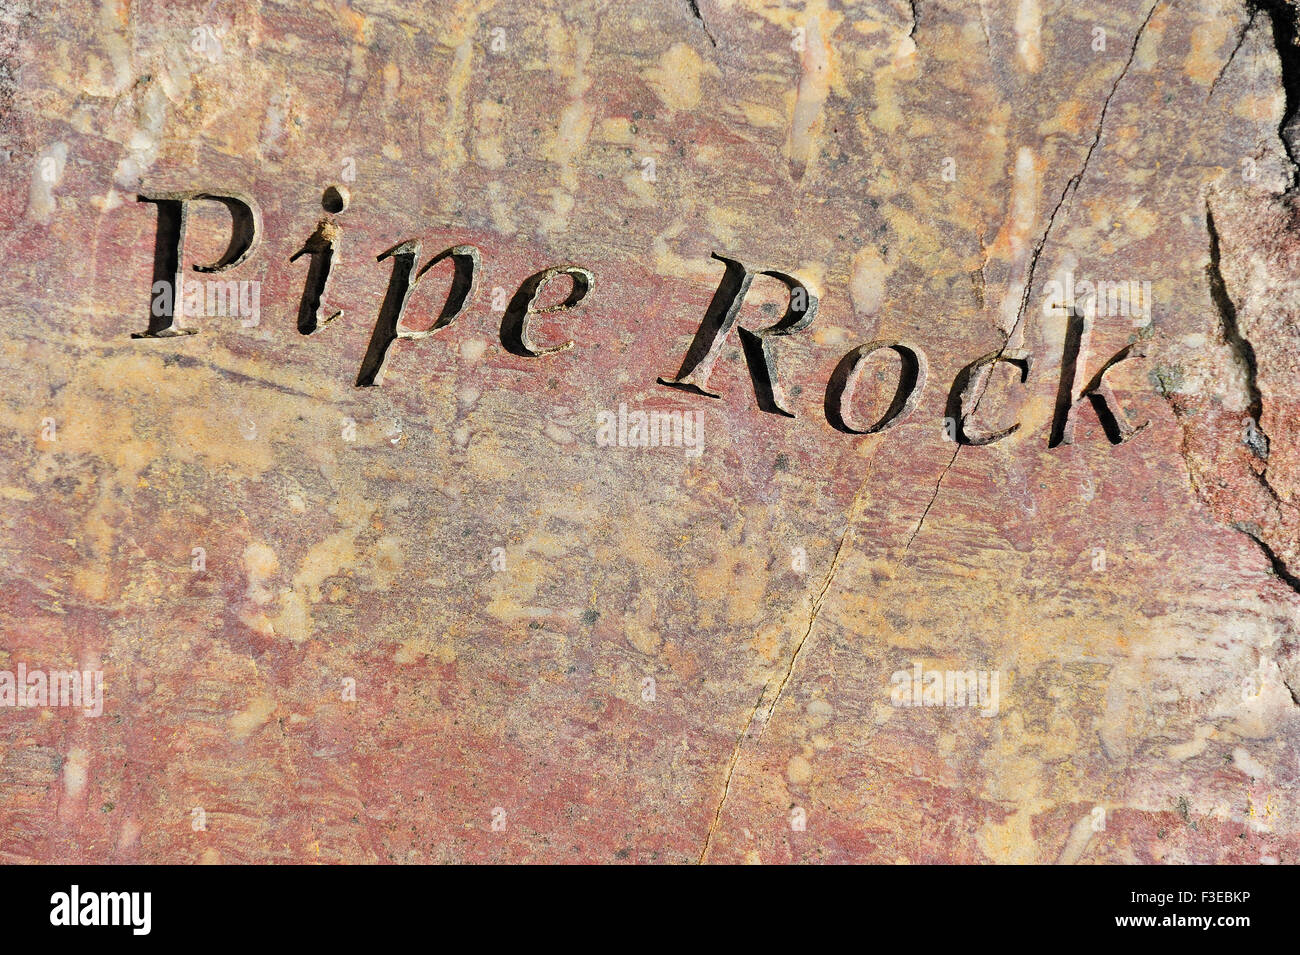 Pipe Rock Fragment, ein Teil des Puzzles Knockan am Knockan Crag National Nature Reserve, Highlands, Schottland Stockfoto